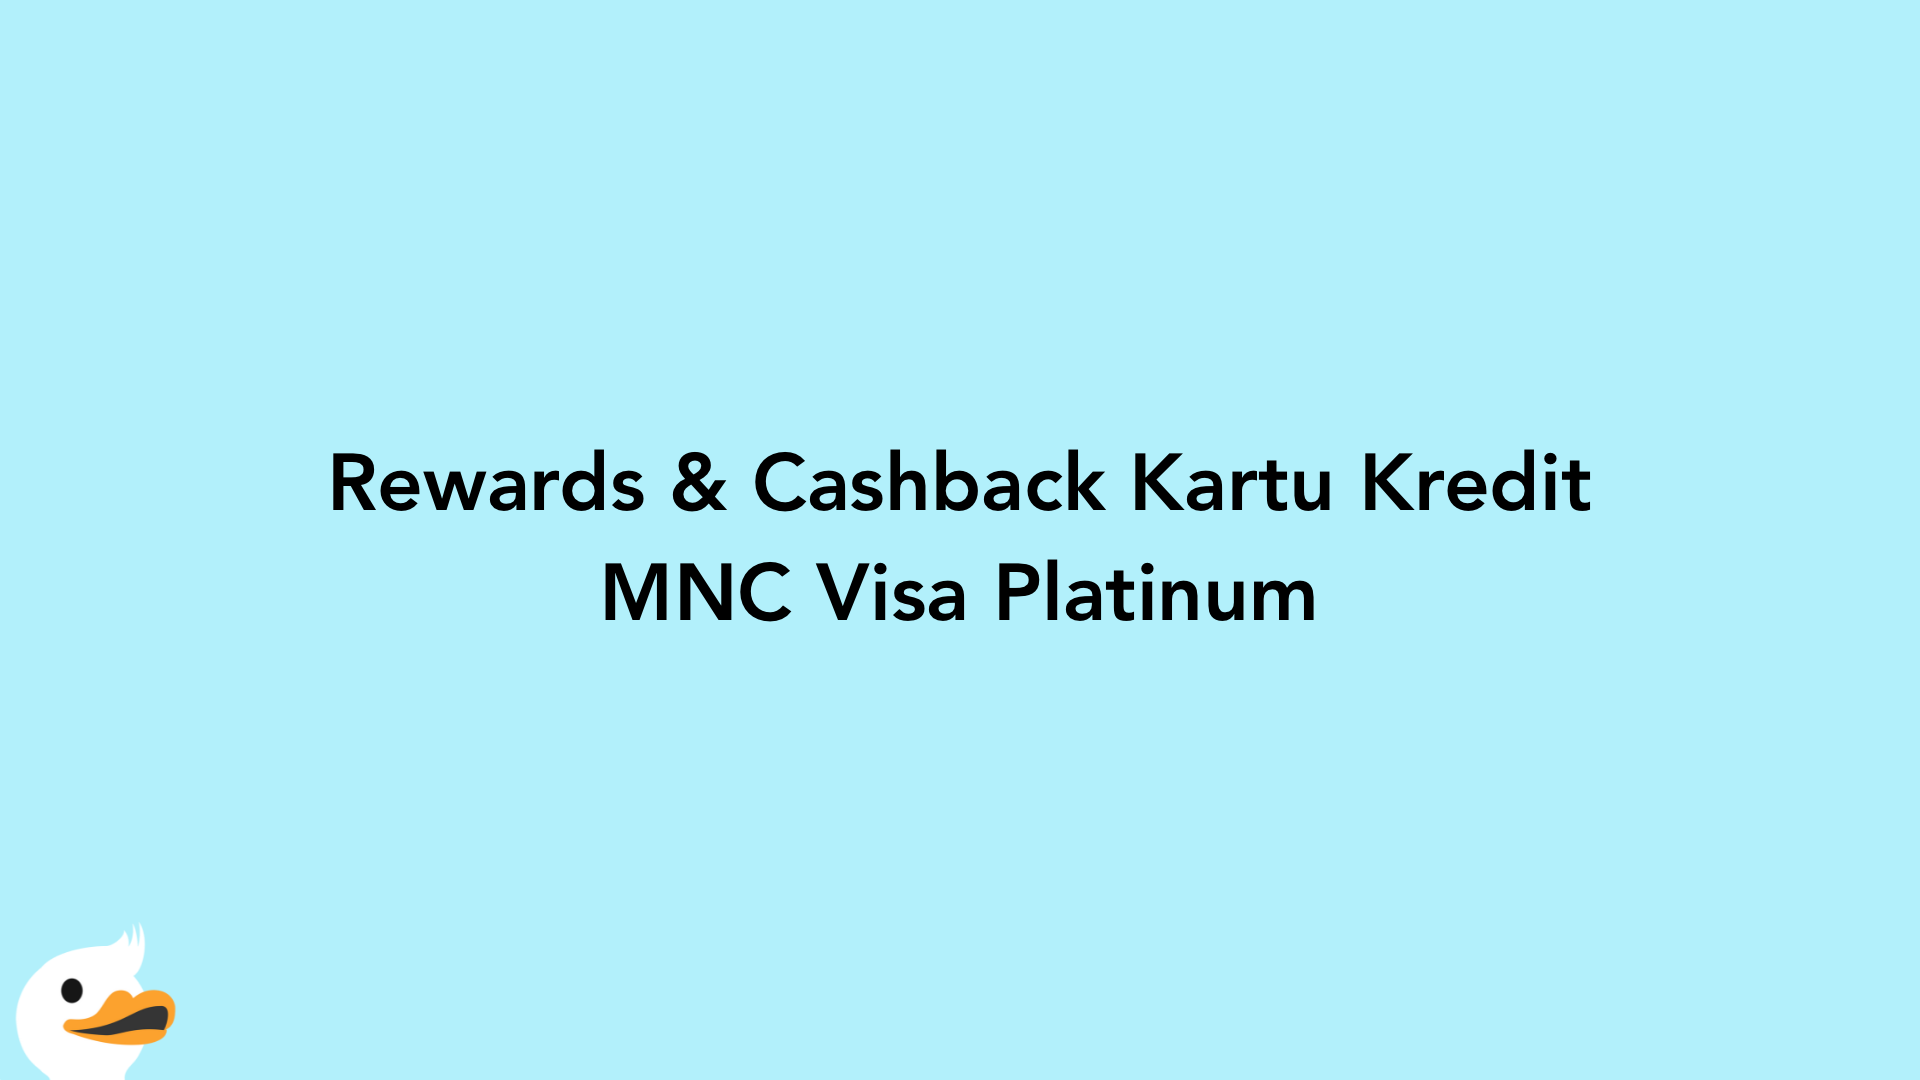 Rewards & Cashback Kartu Kredit MNC Visa Platinum